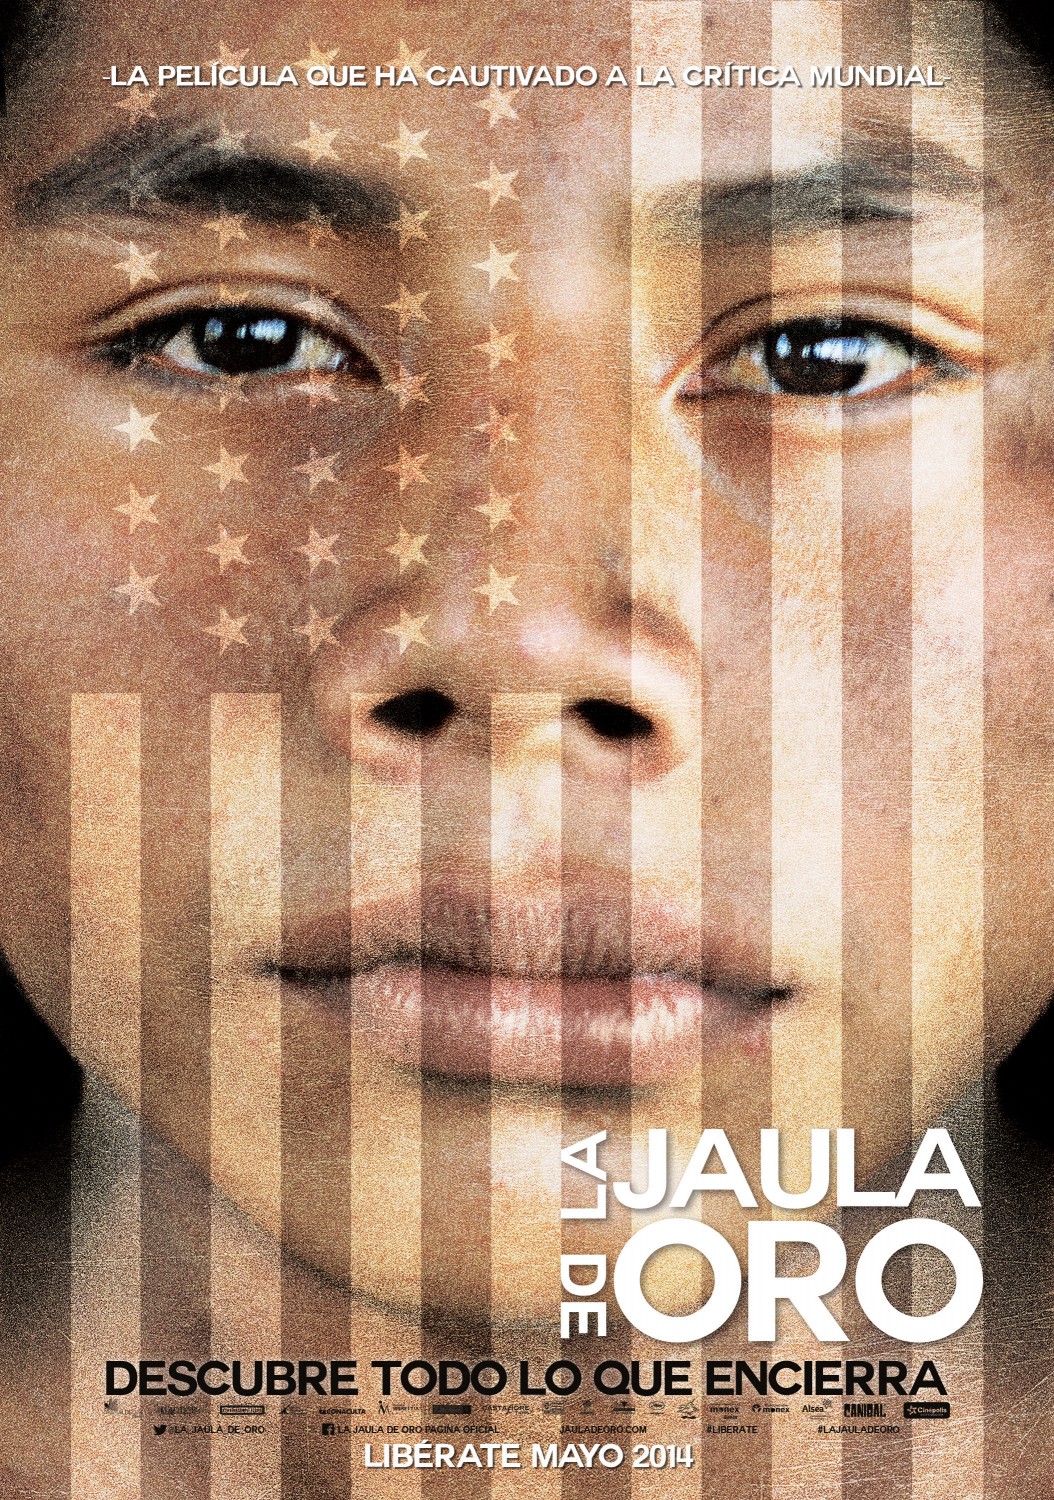 Extra Large Movie Poster Image for La jaula de oro (#1 of 8)